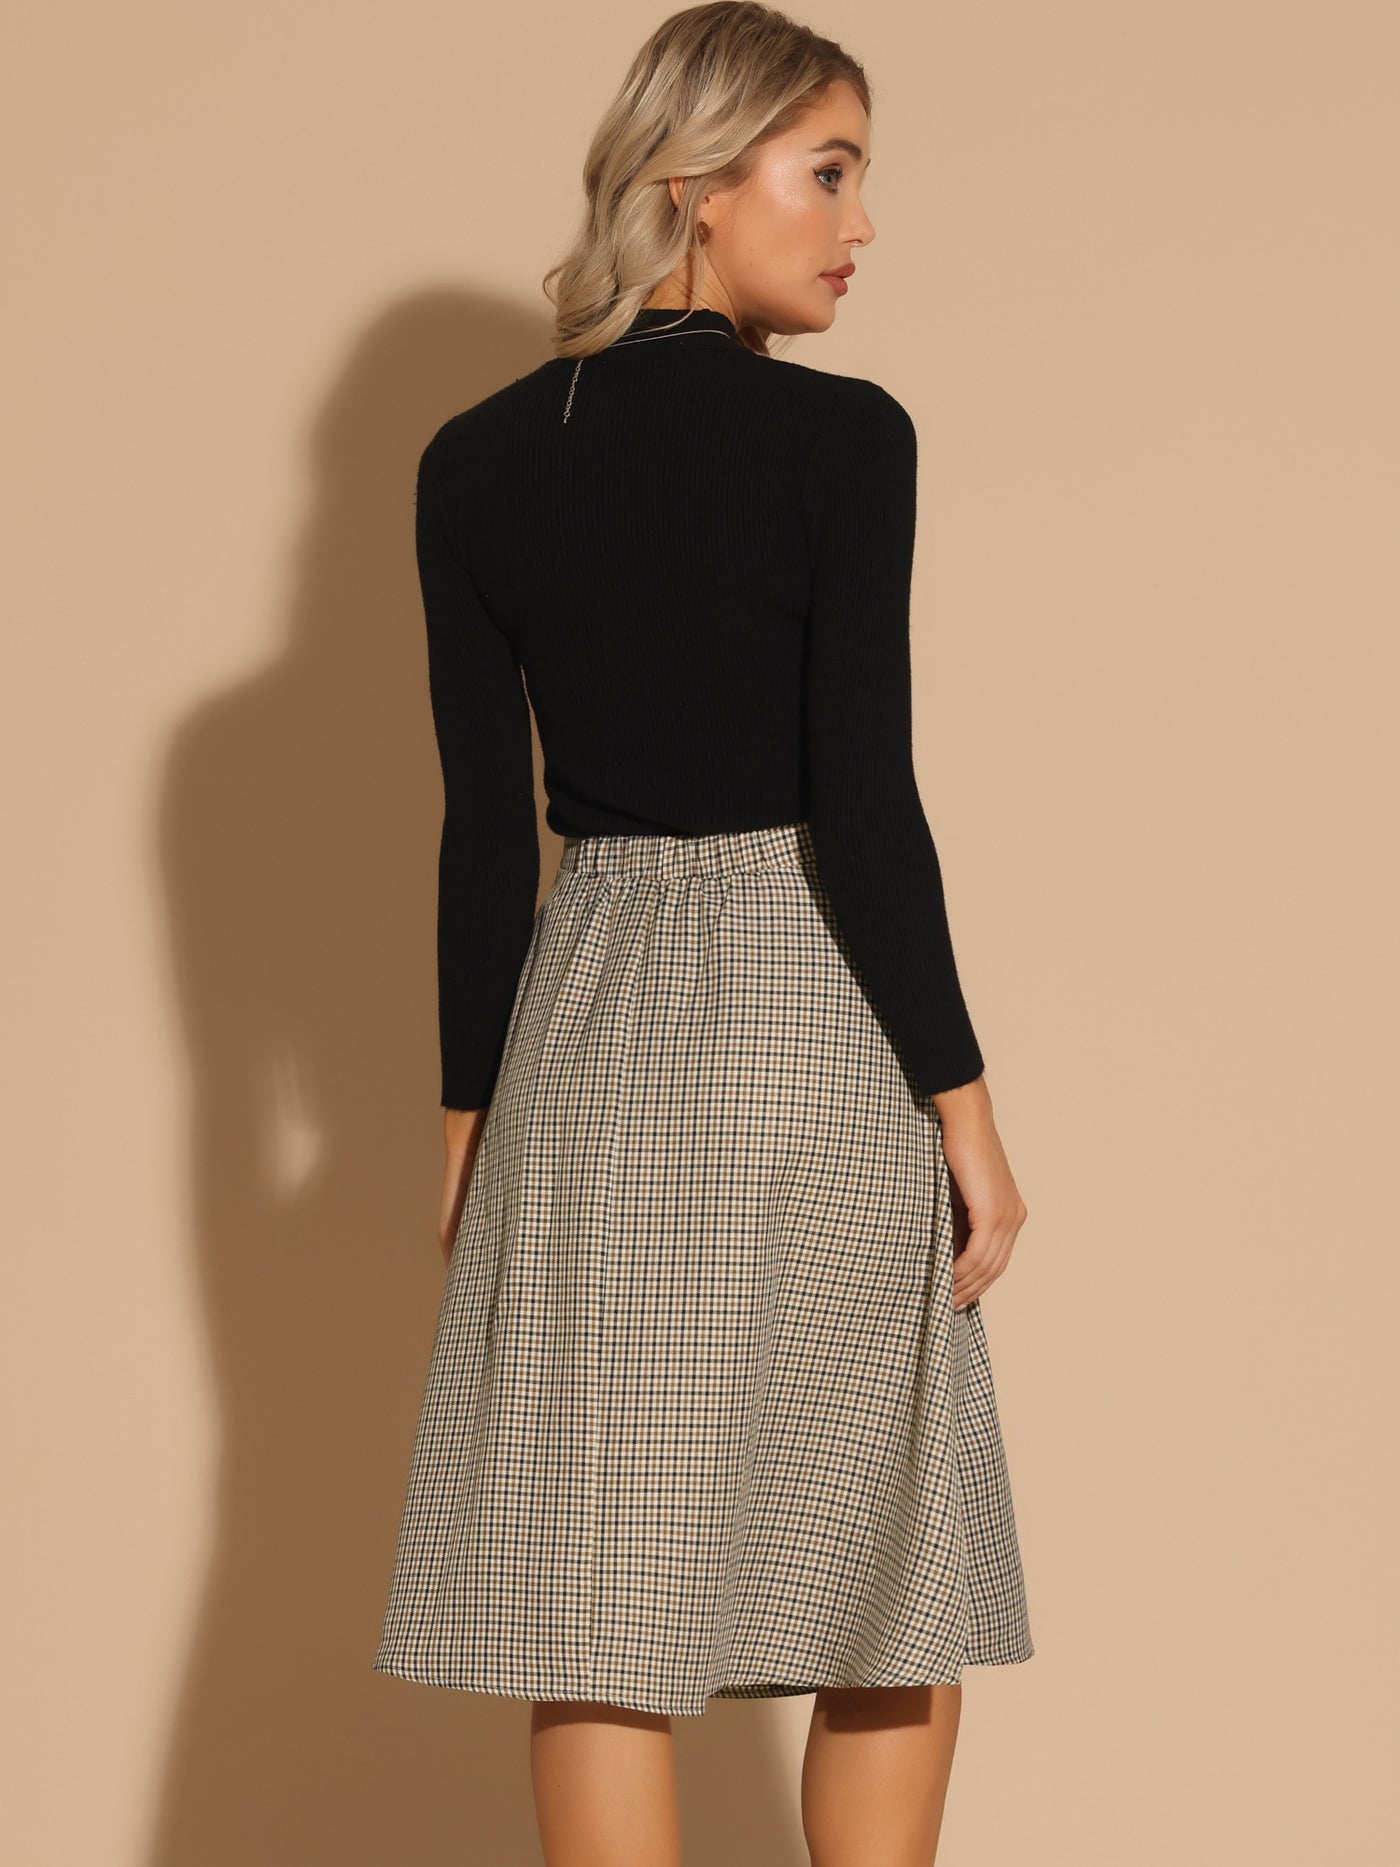 Allegra K Vintage Plaid Skirts for Women's High Waist Pleated A-Line Midi Skirt